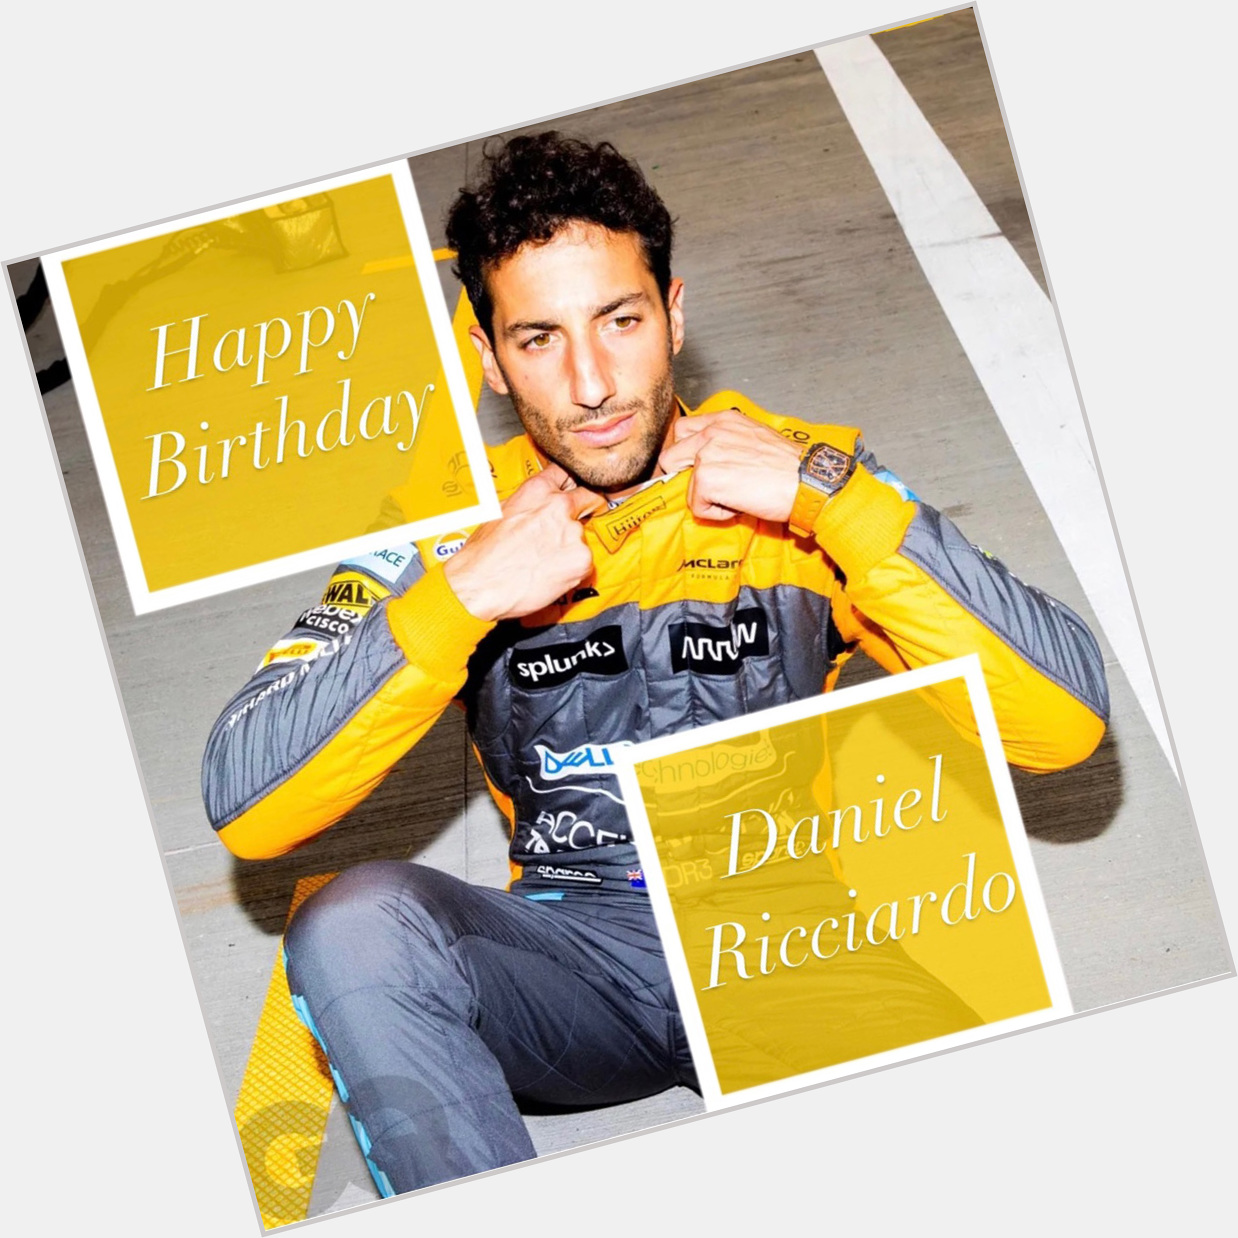  Happy Birthday  Daniel Ricciardo 7 1   33                                       